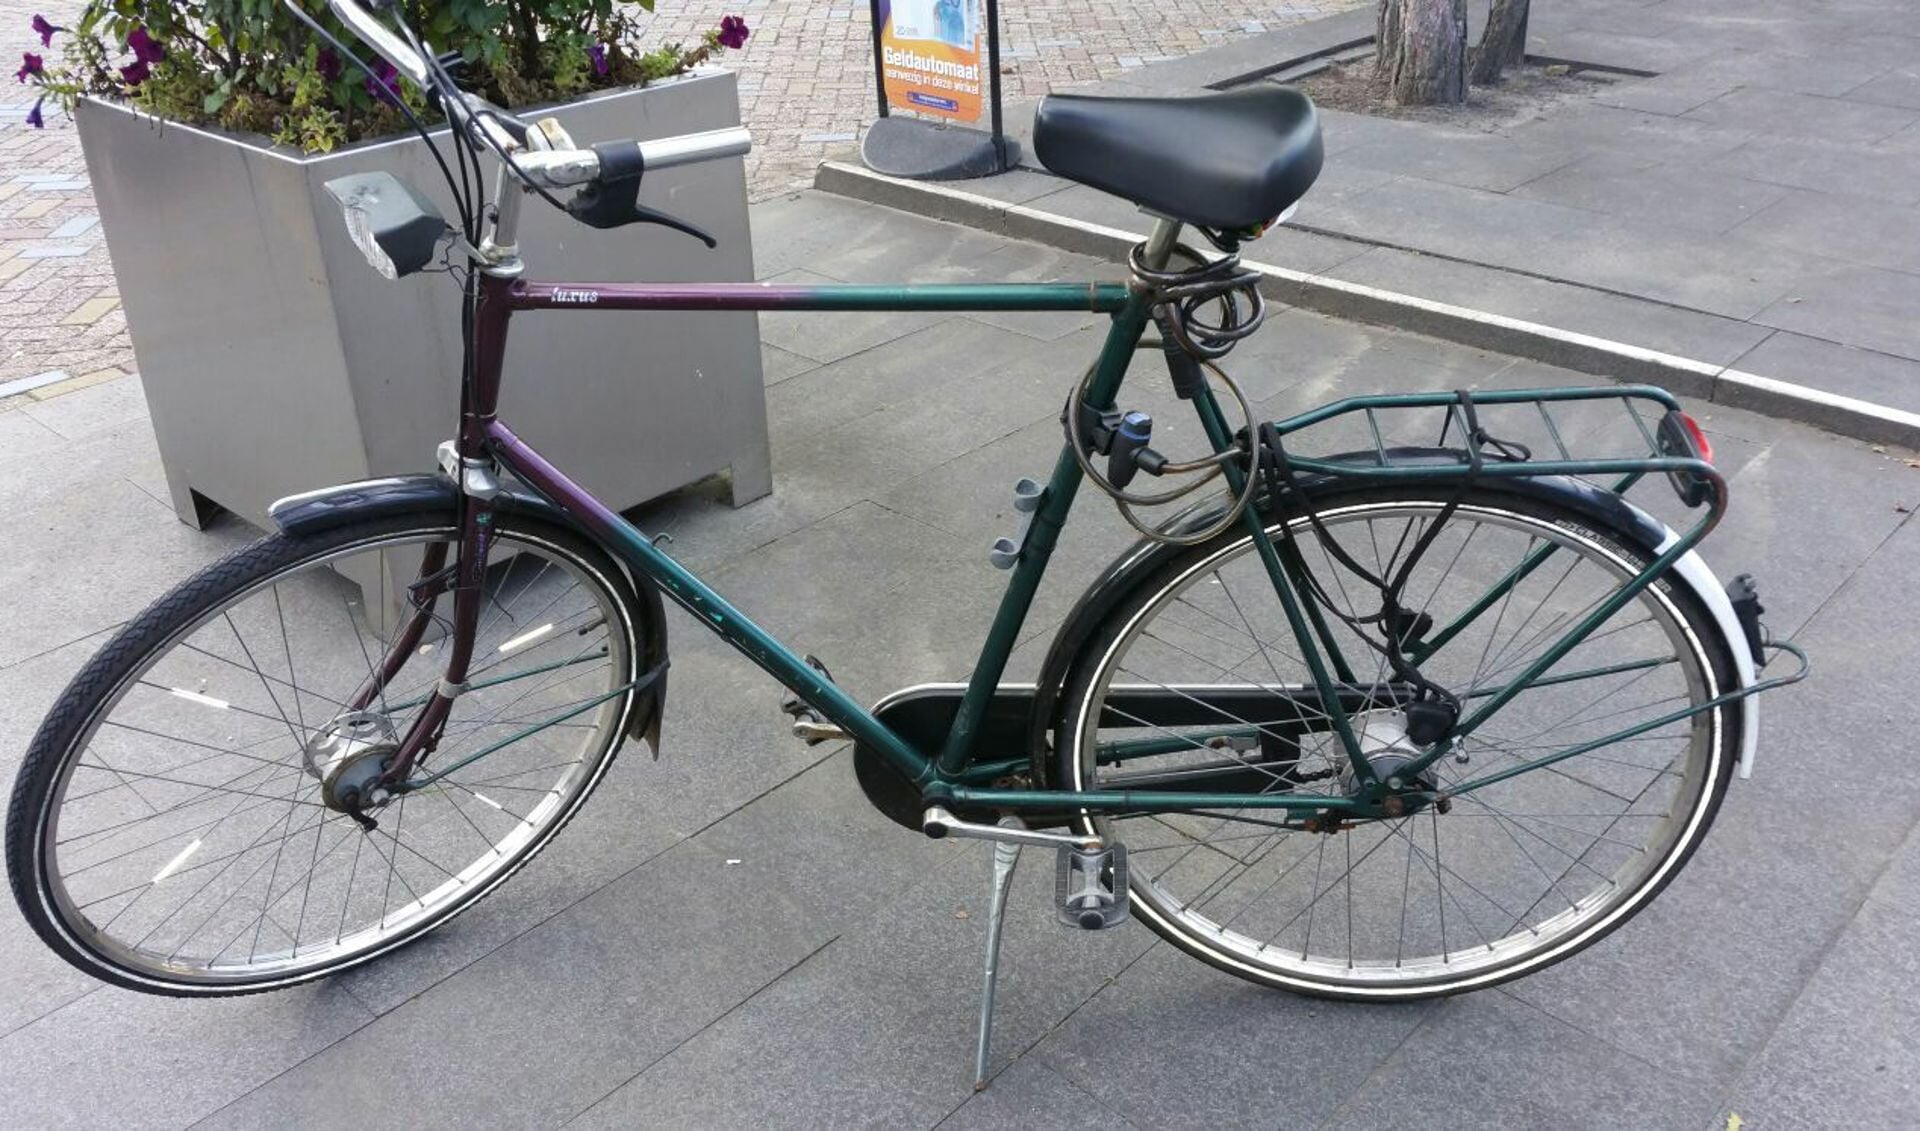 De fiets in Ravenstein. (Foto: Facebook politie Oss)